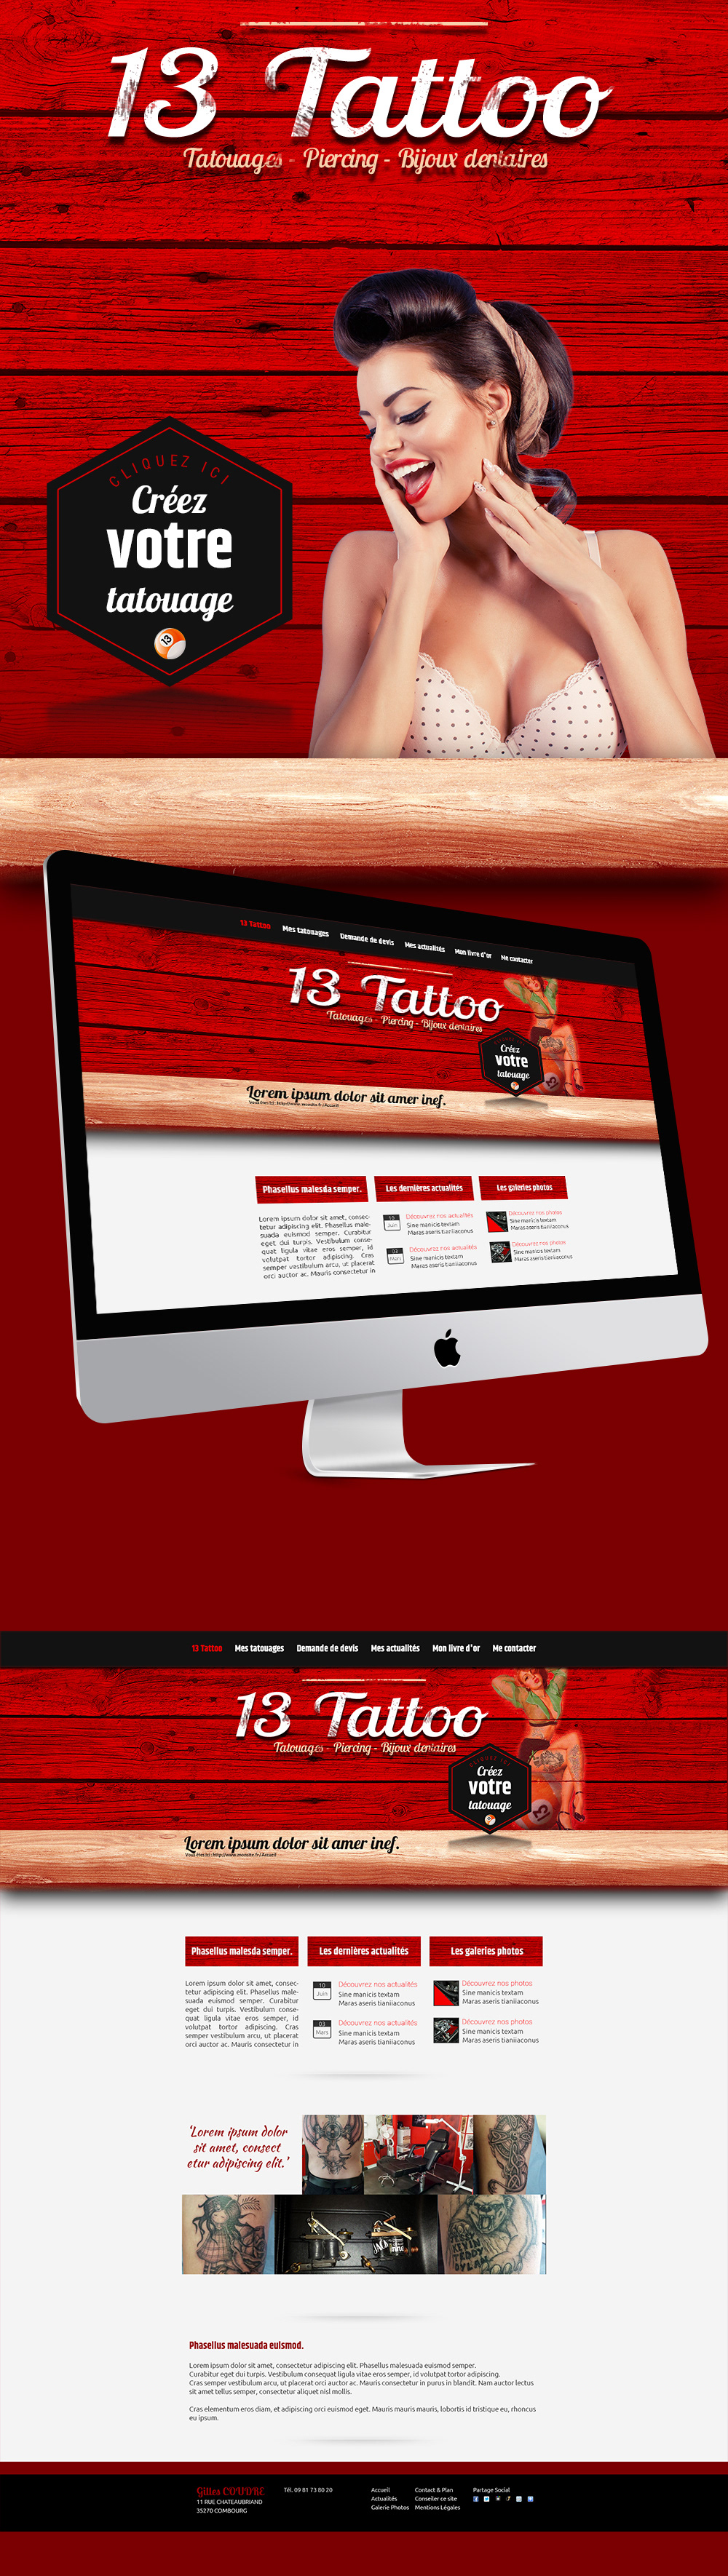 Webdesign tattoo